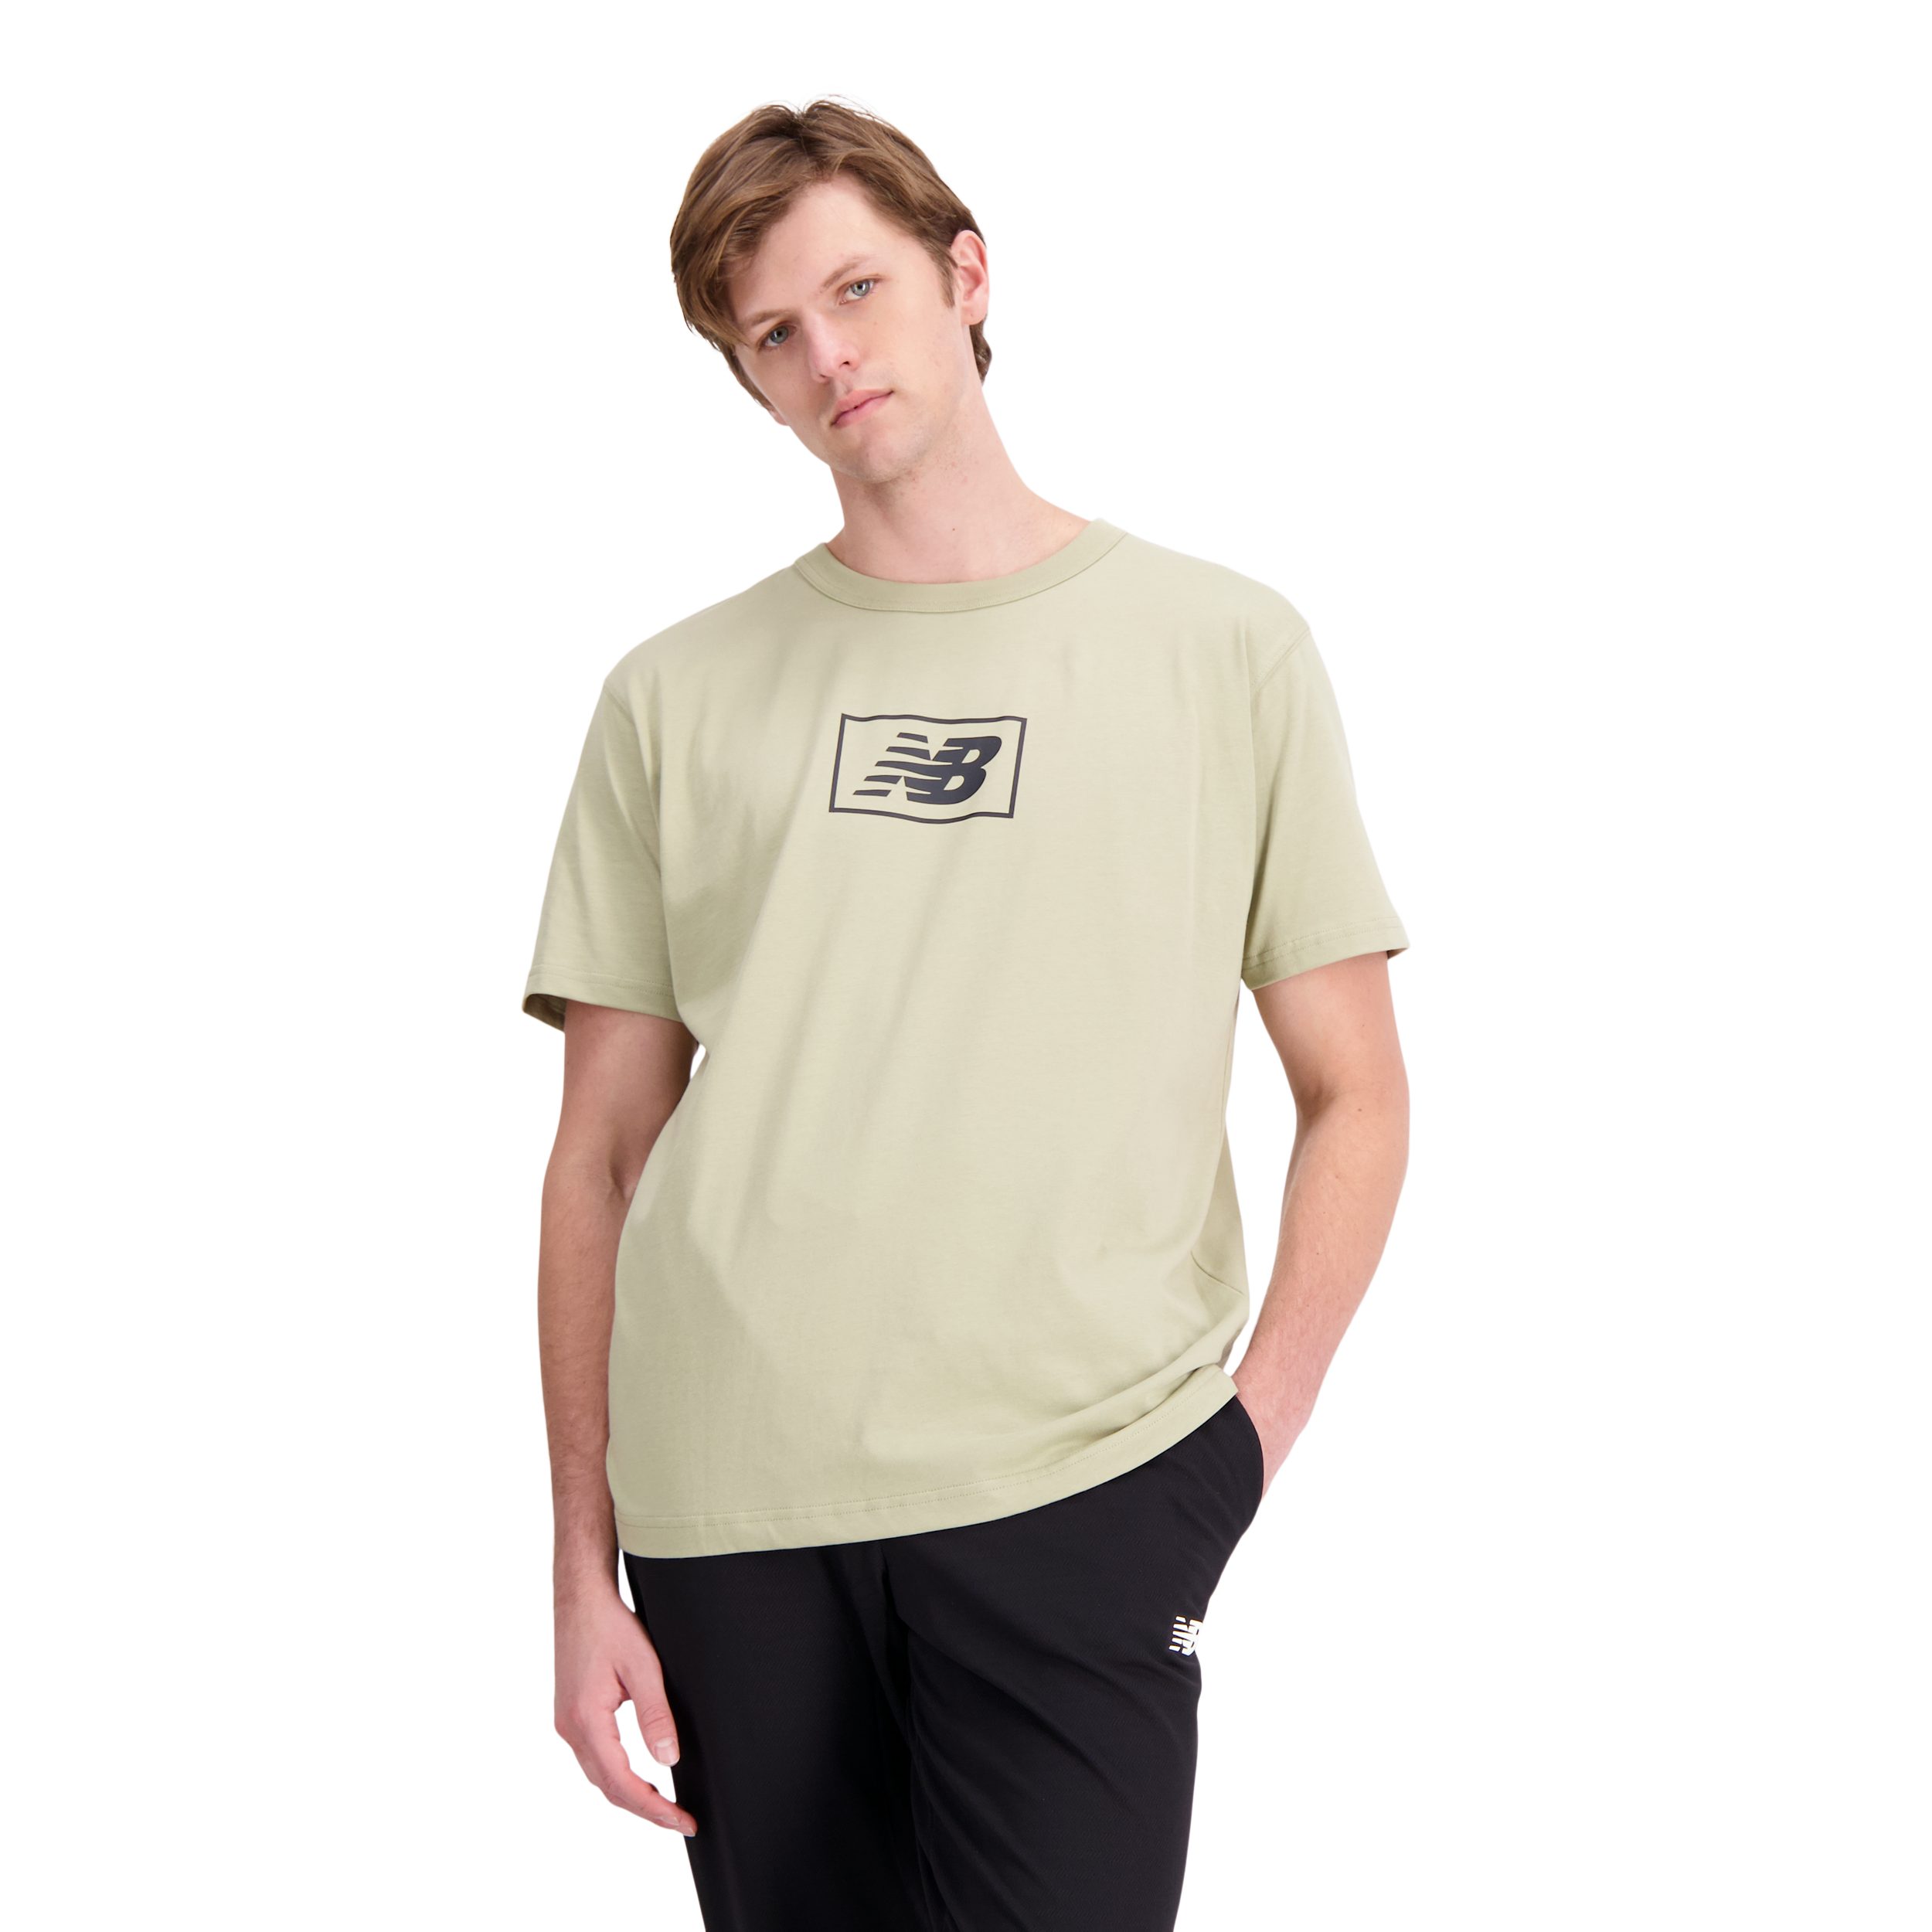 New Balance T-Shirt fatigue green | T-Shirts